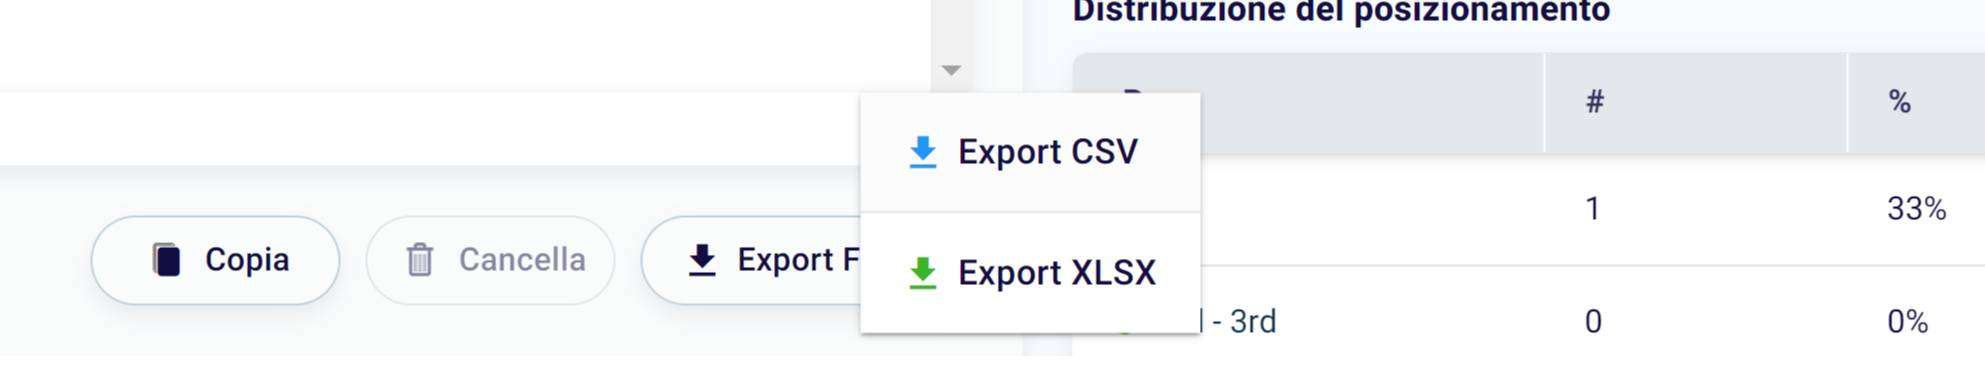 export dati in formato xlsx 